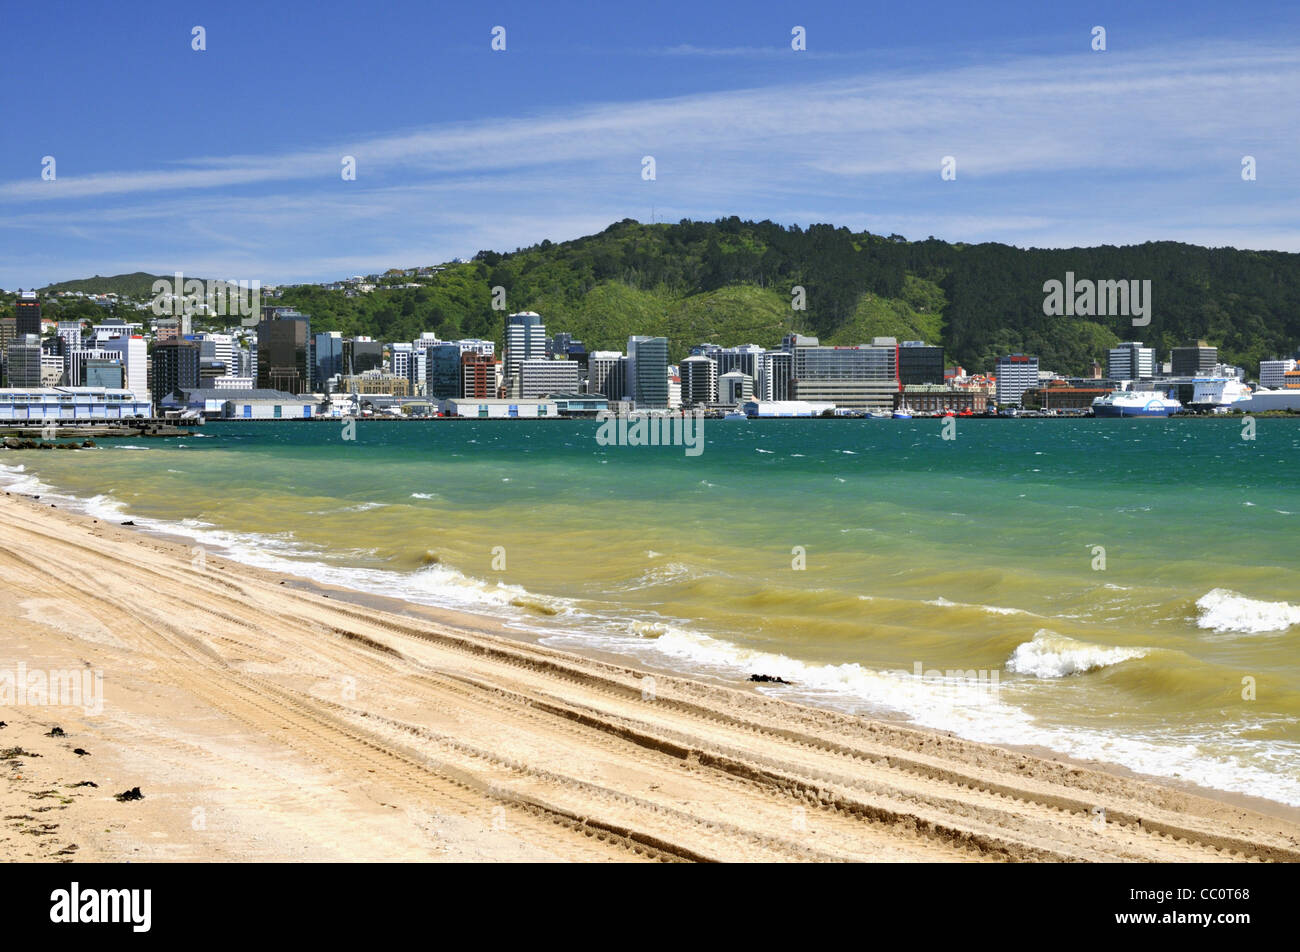 Wellington city skyline viewed across Oriental Bay from the beach, New Zealand. Stock Photo